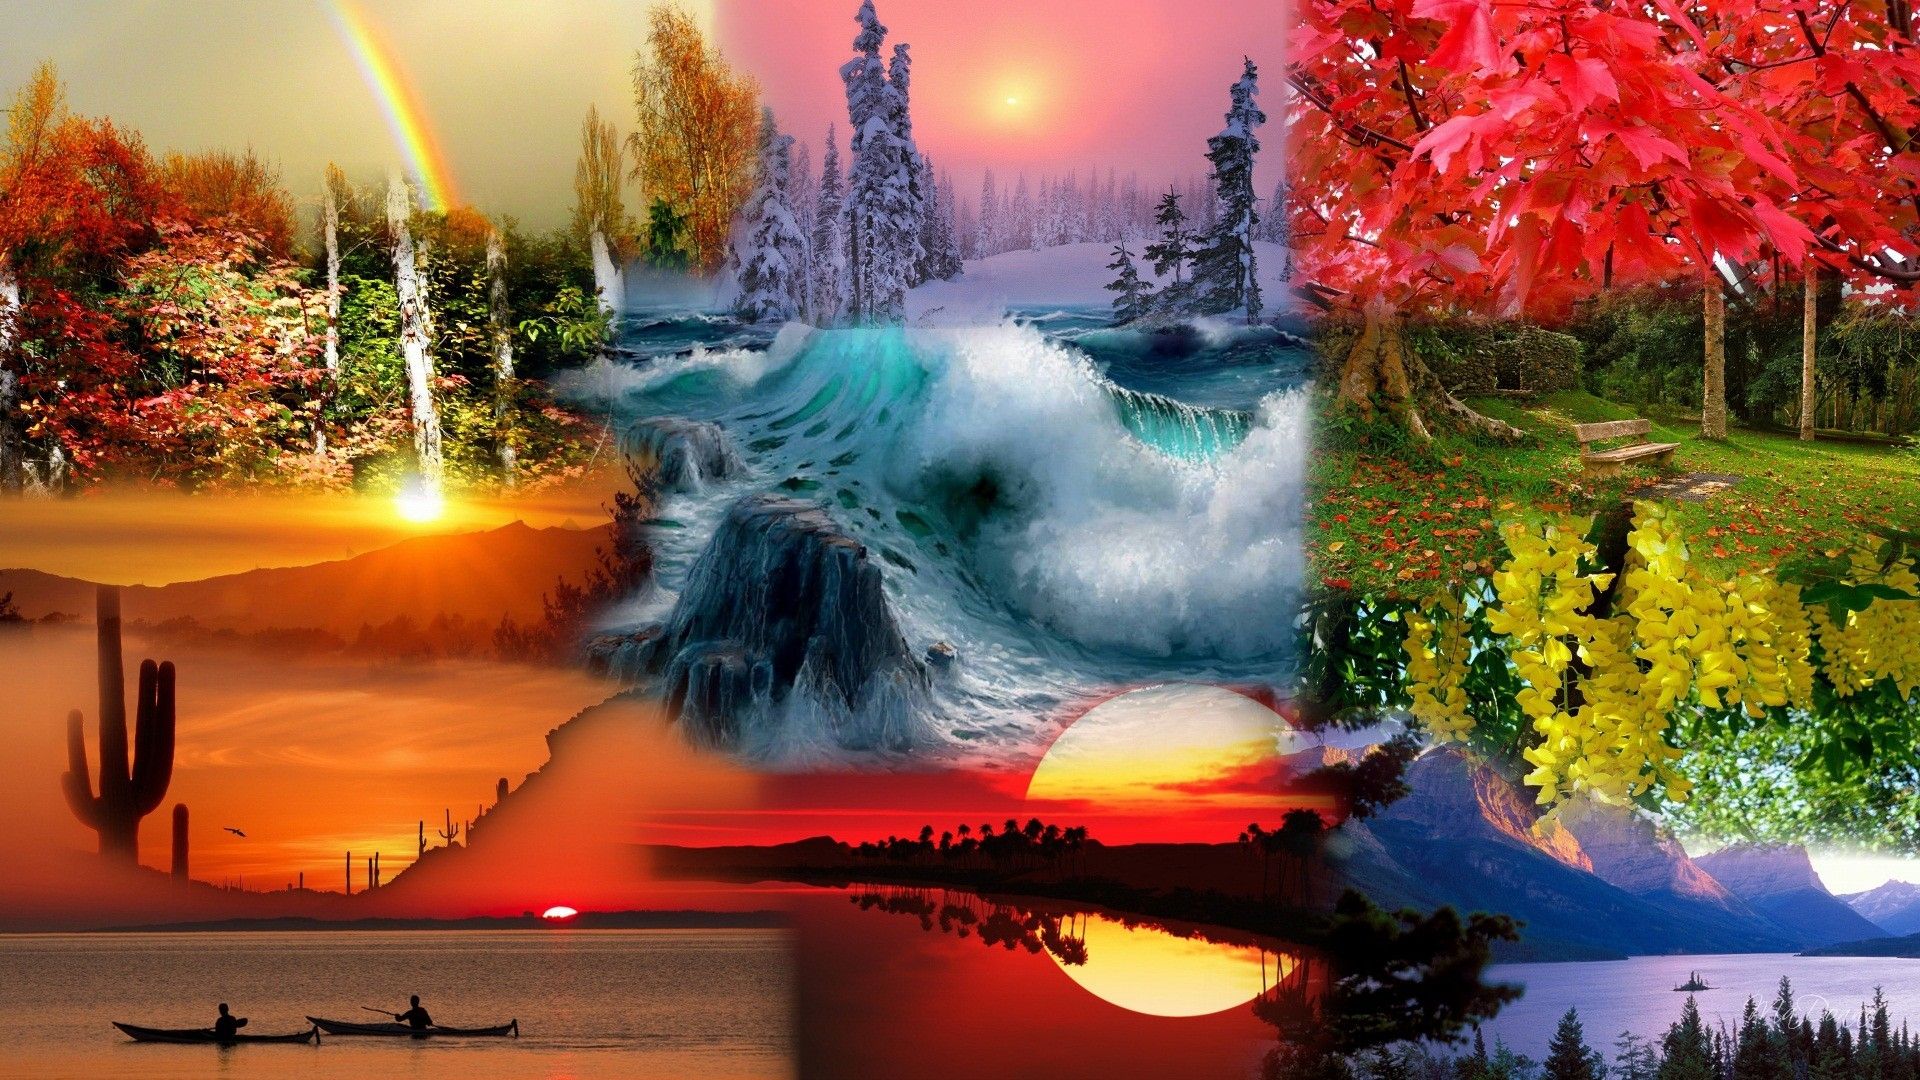 Download 1920x1080 Autumn desert Nature Collage wallpaper